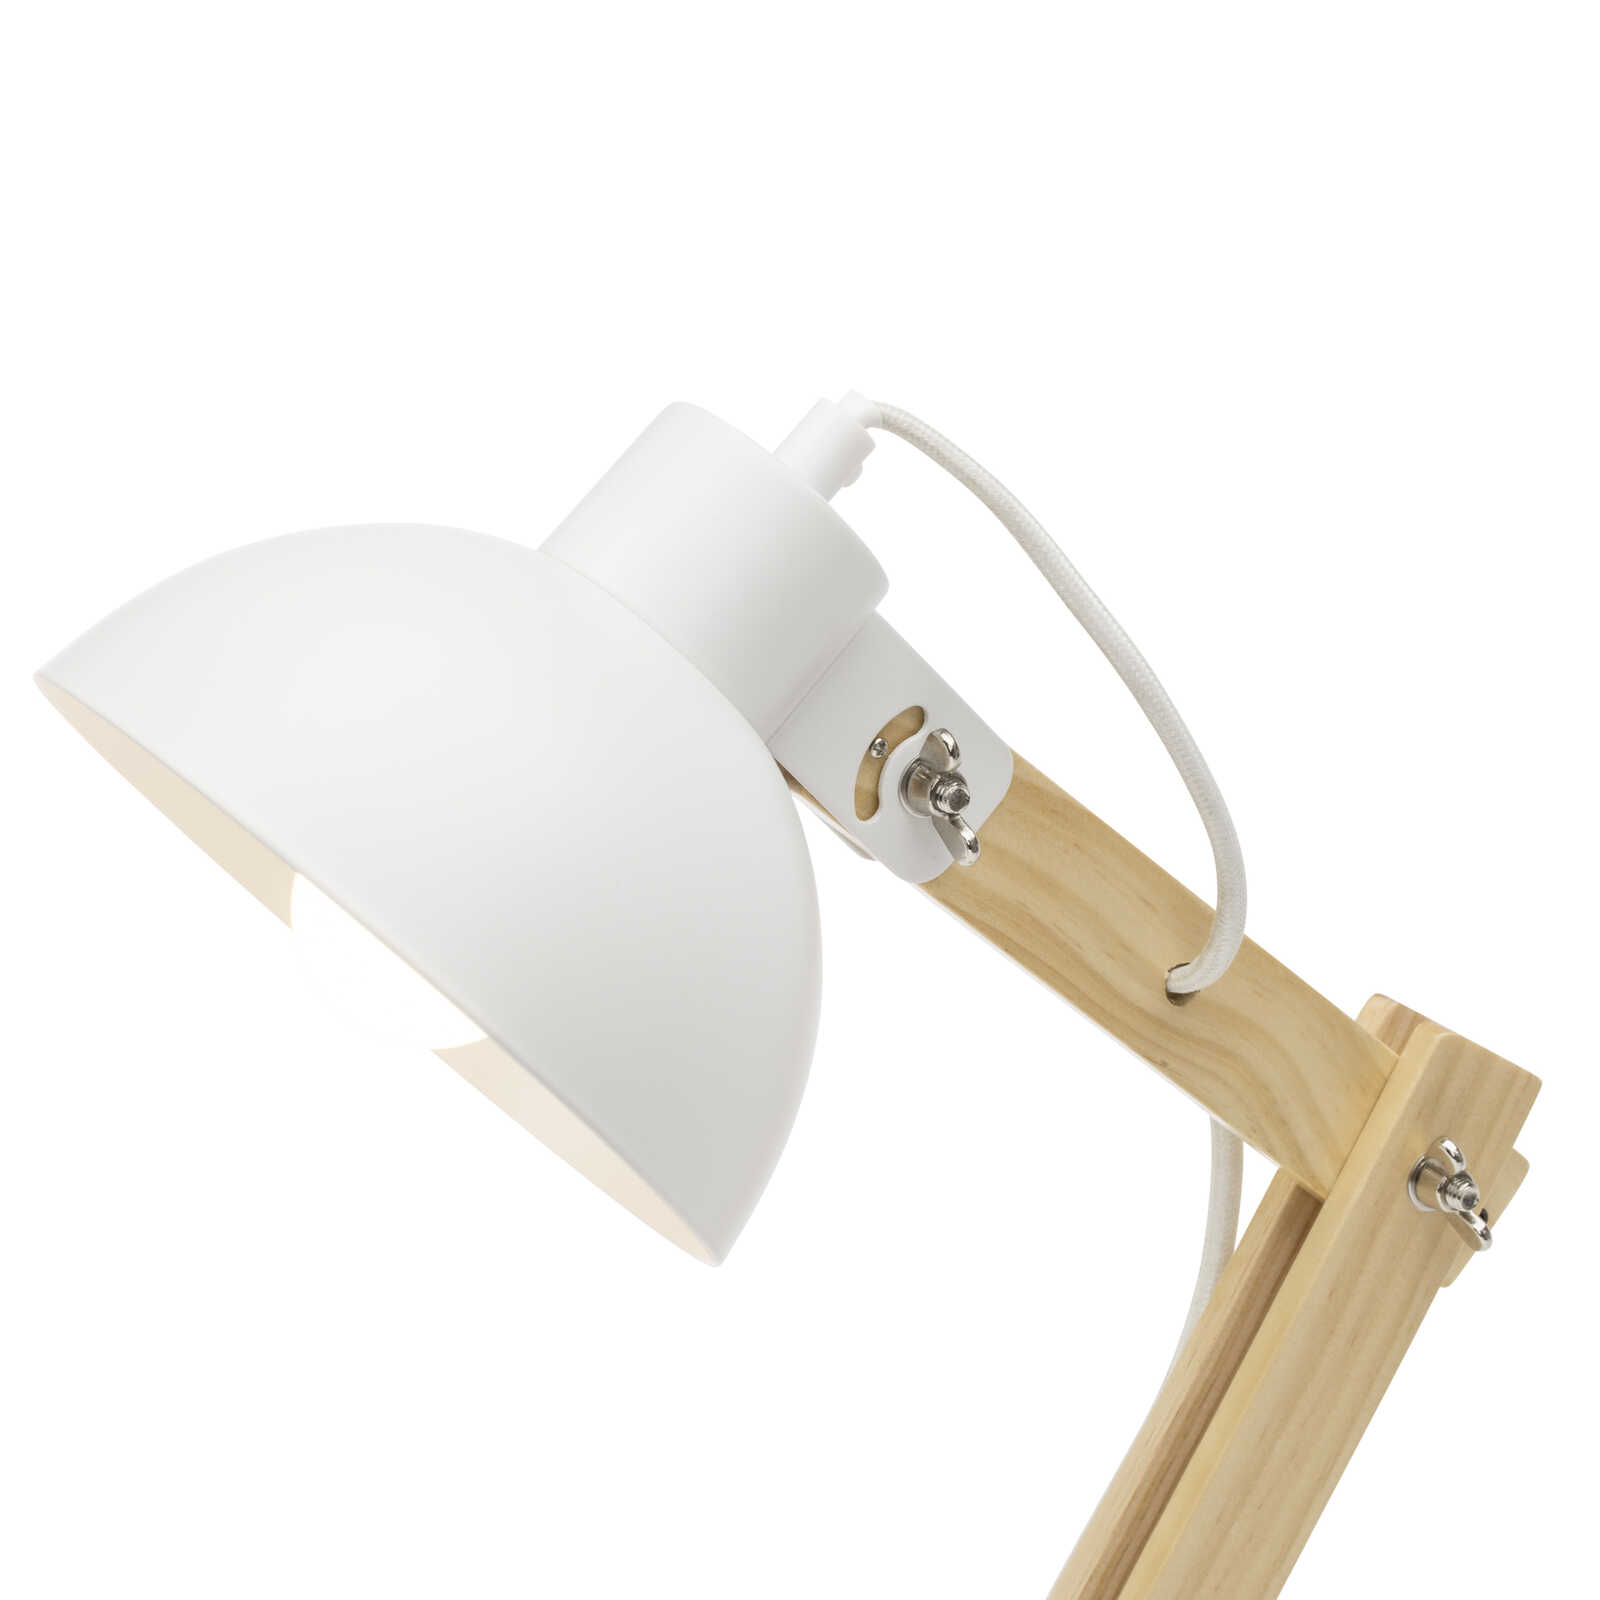             Houten tafellamp - Lisa 1 - Wit
        